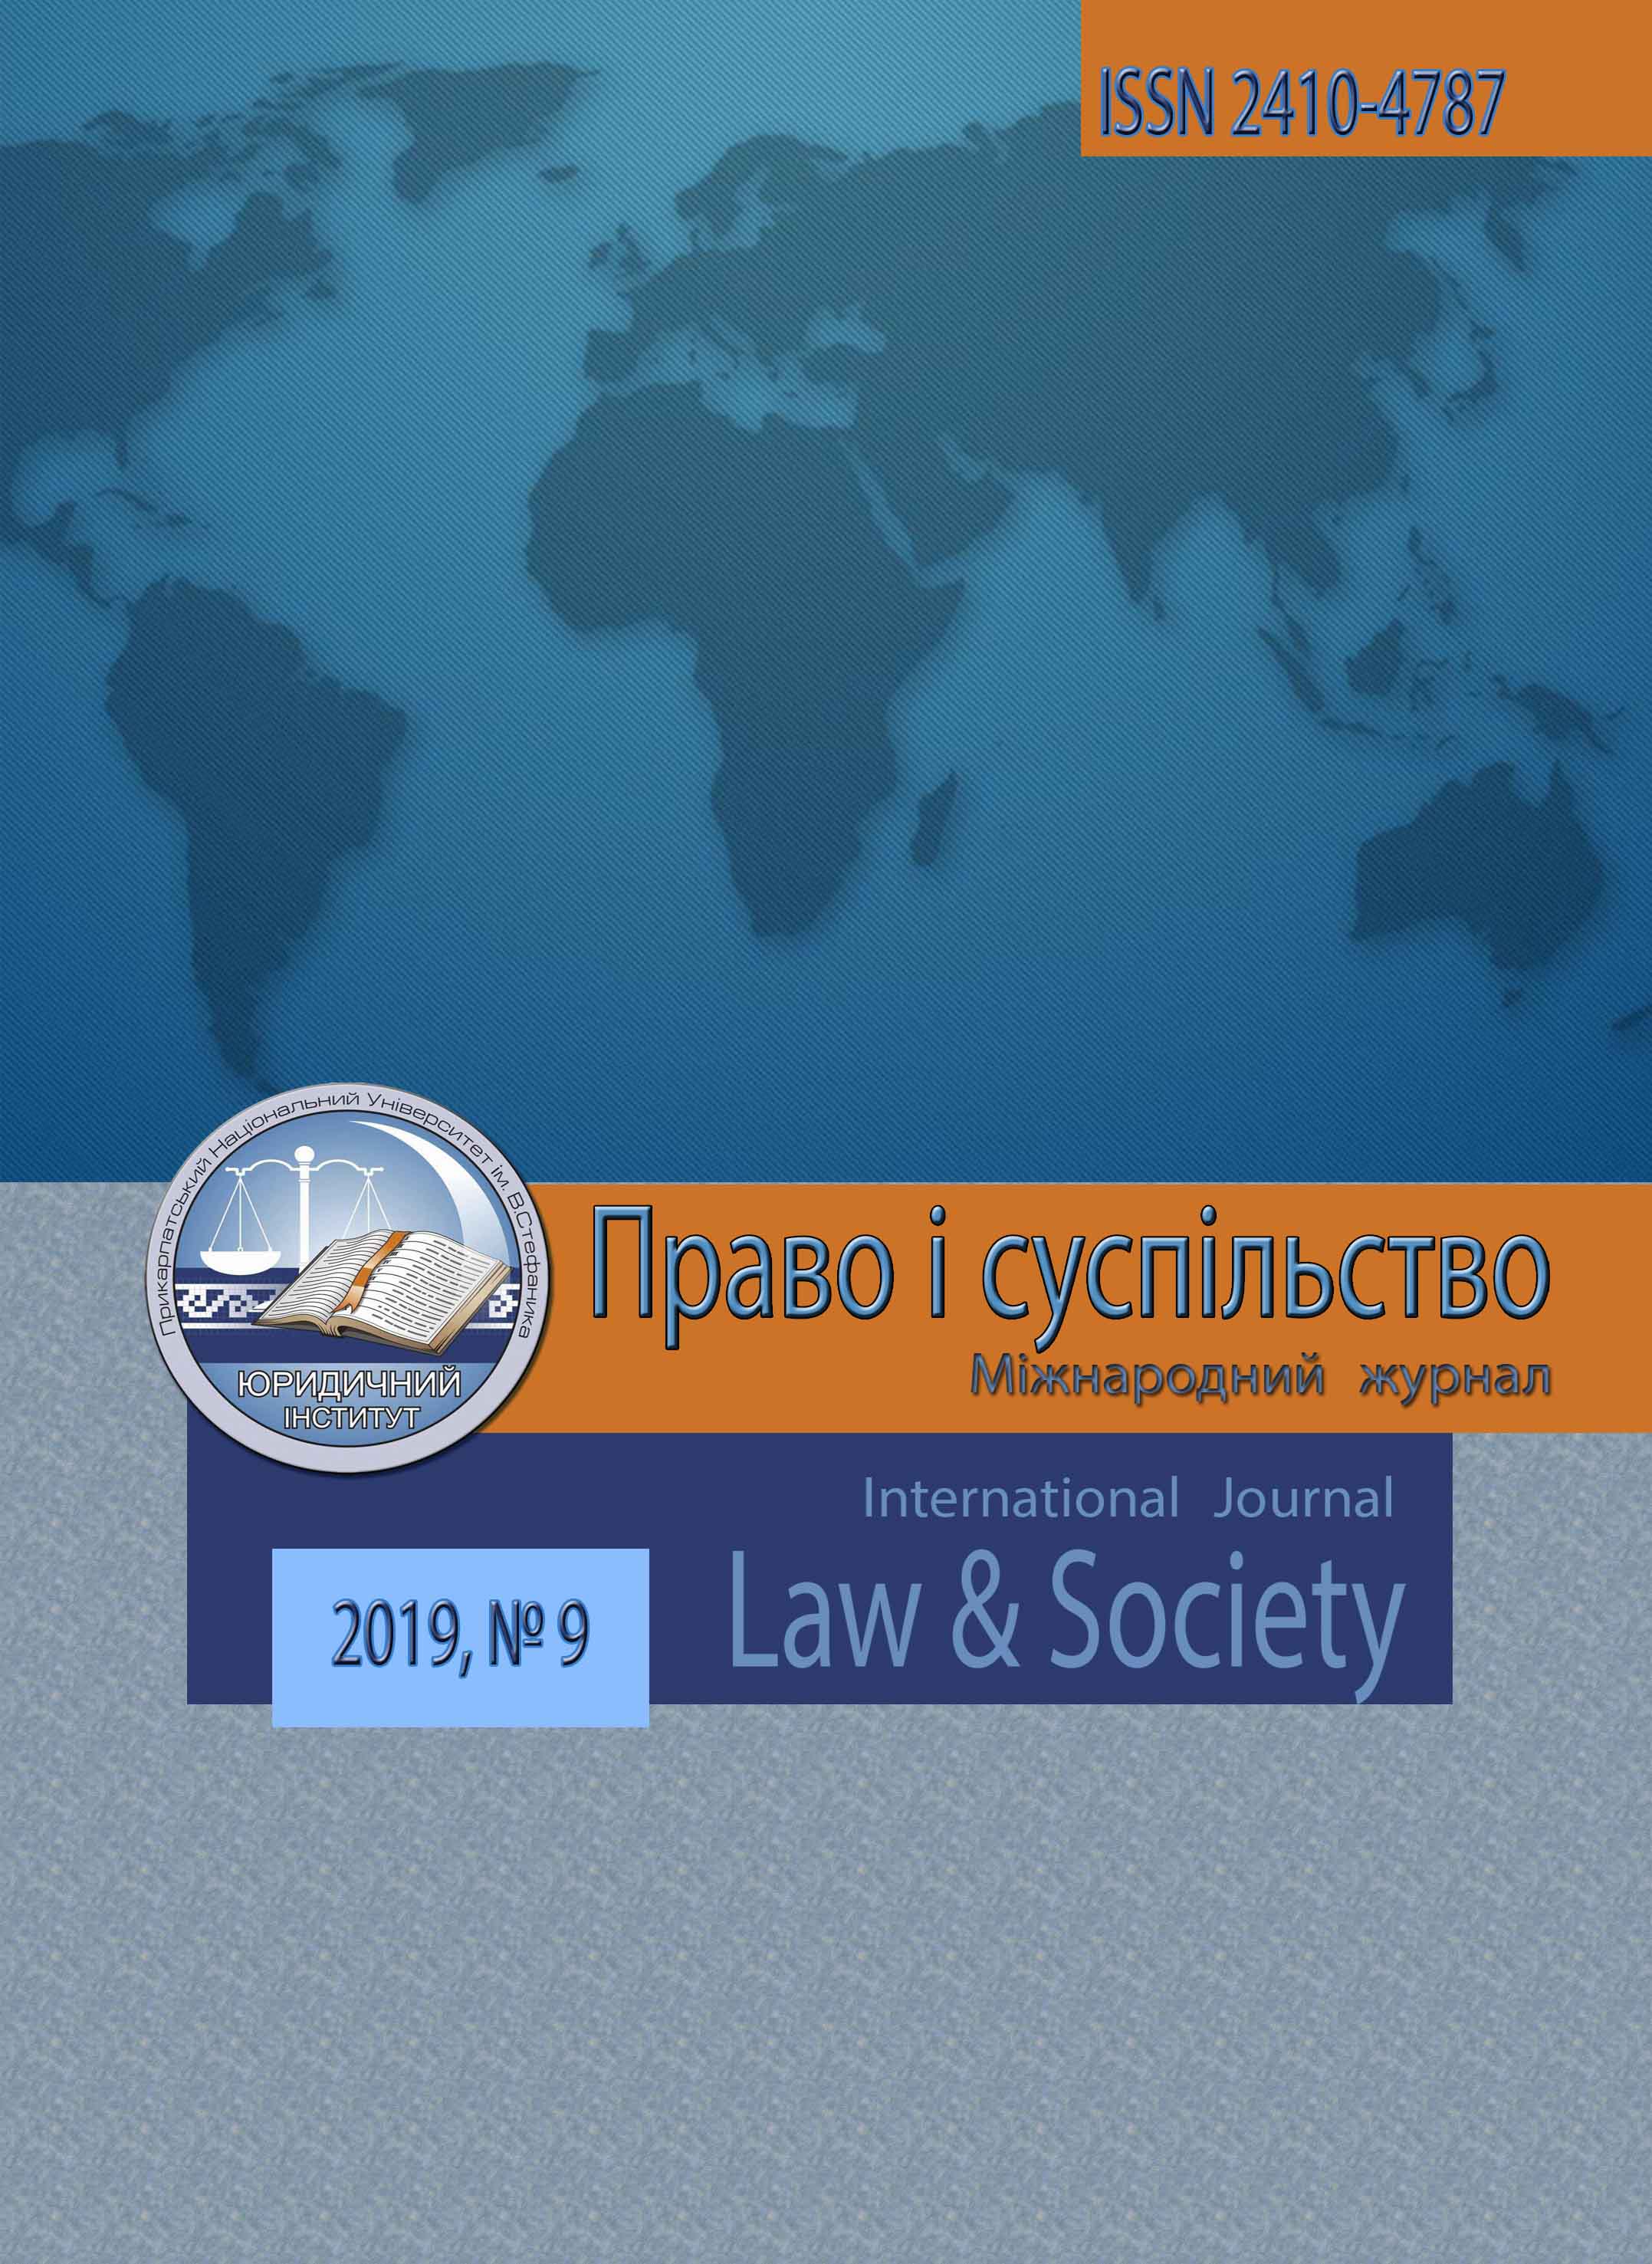 					View Vol. 9 (2019): Law&Society
				